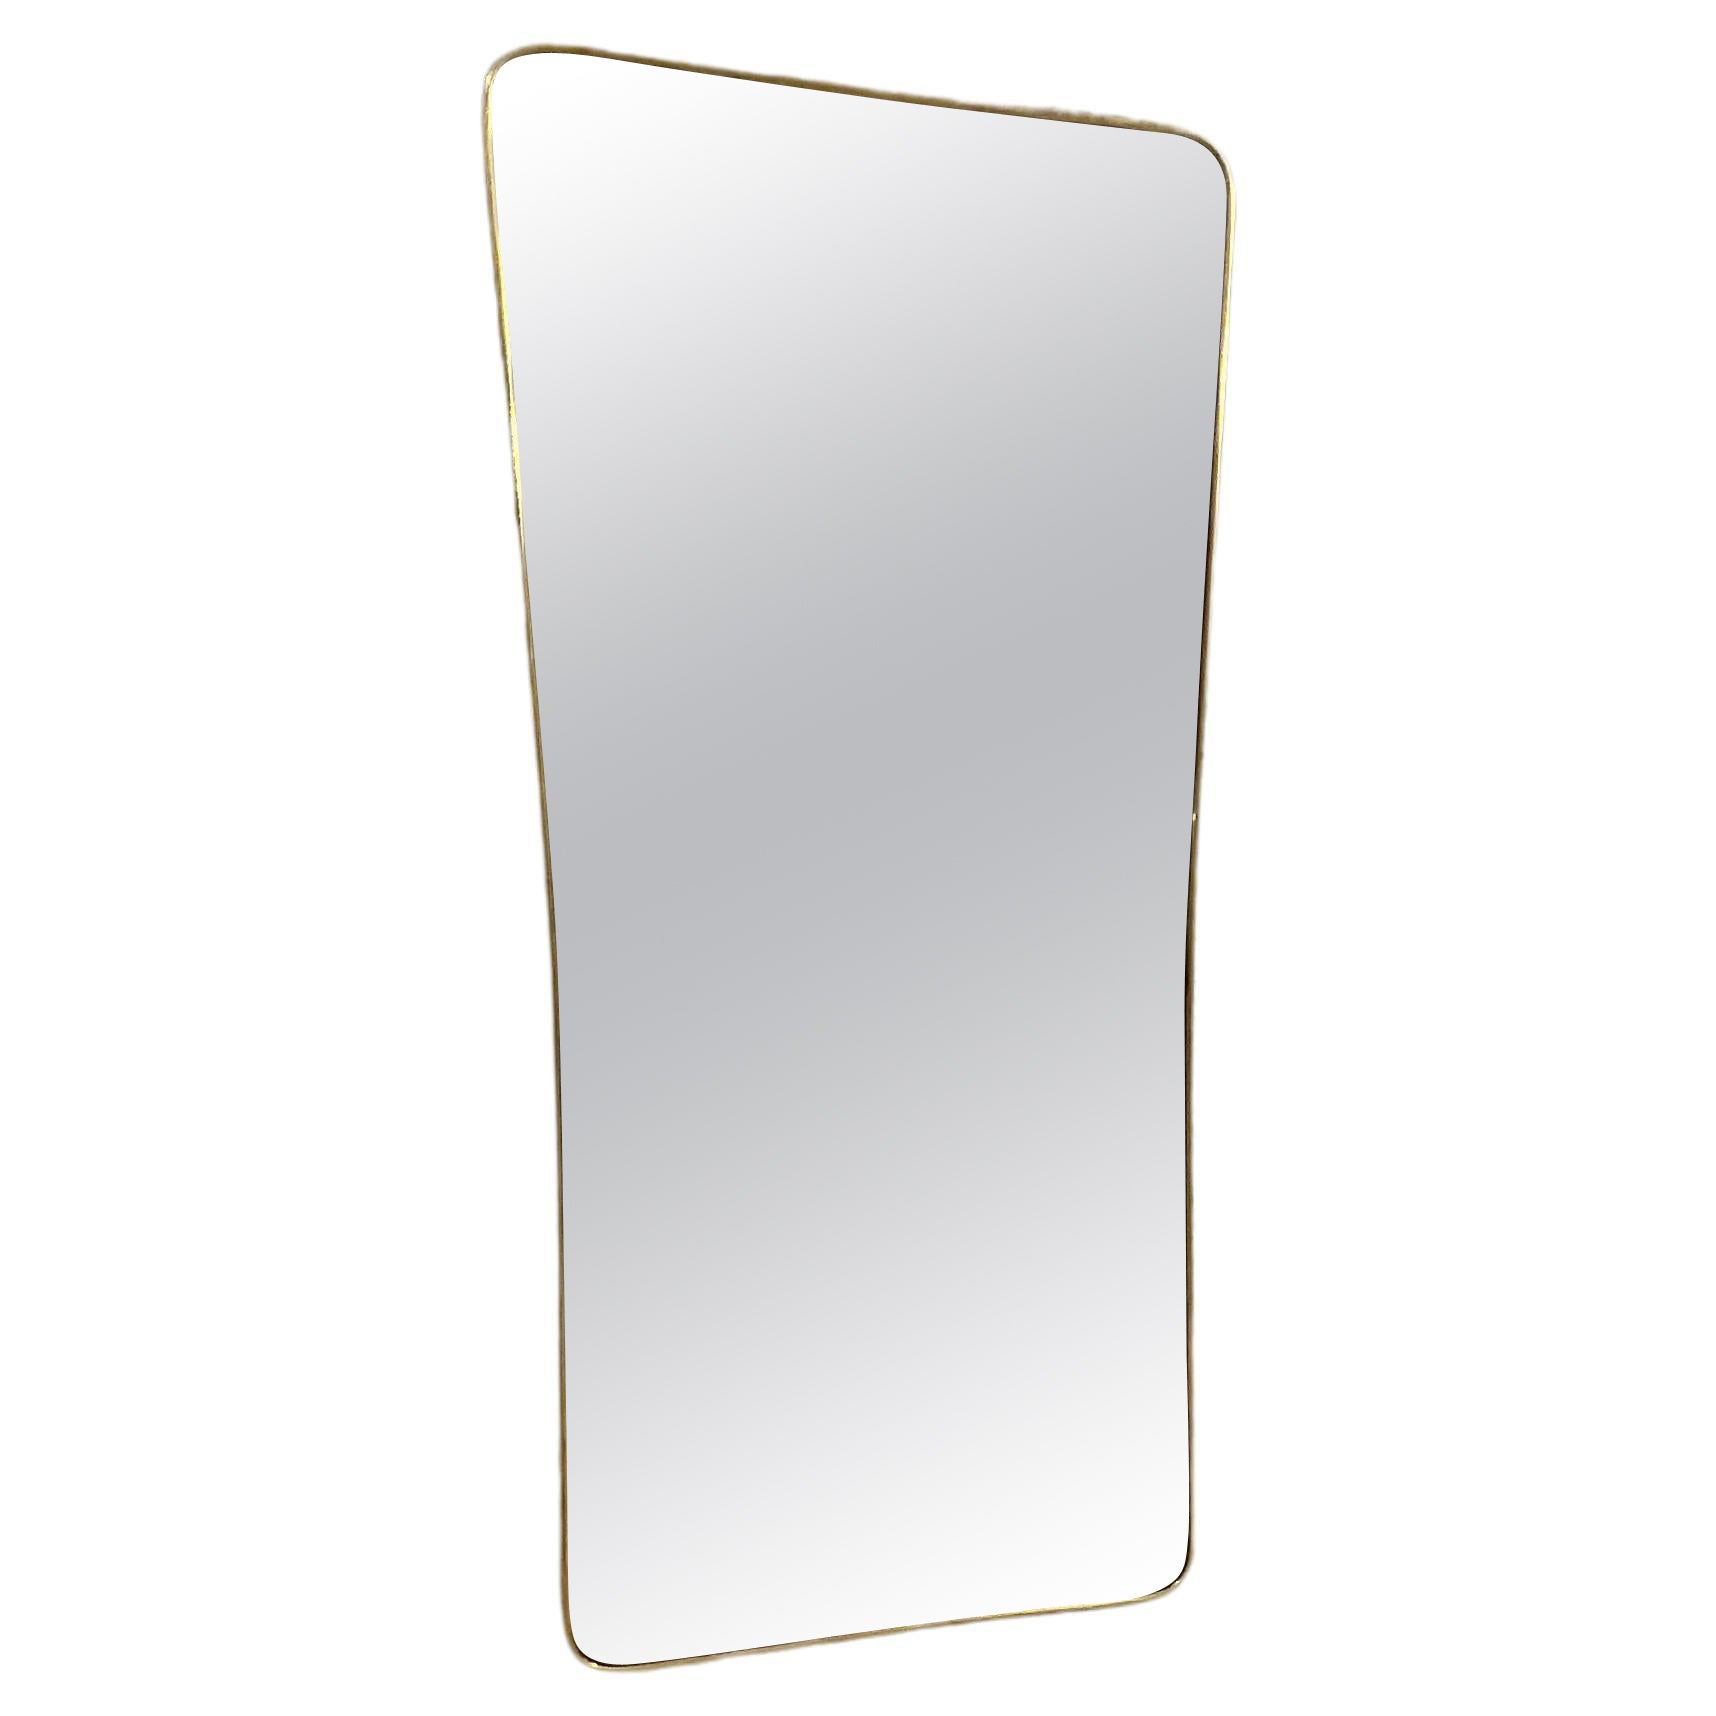 FONTANARTE - Pietro Chiesa - Brass frame mirror - 1950s For Sale